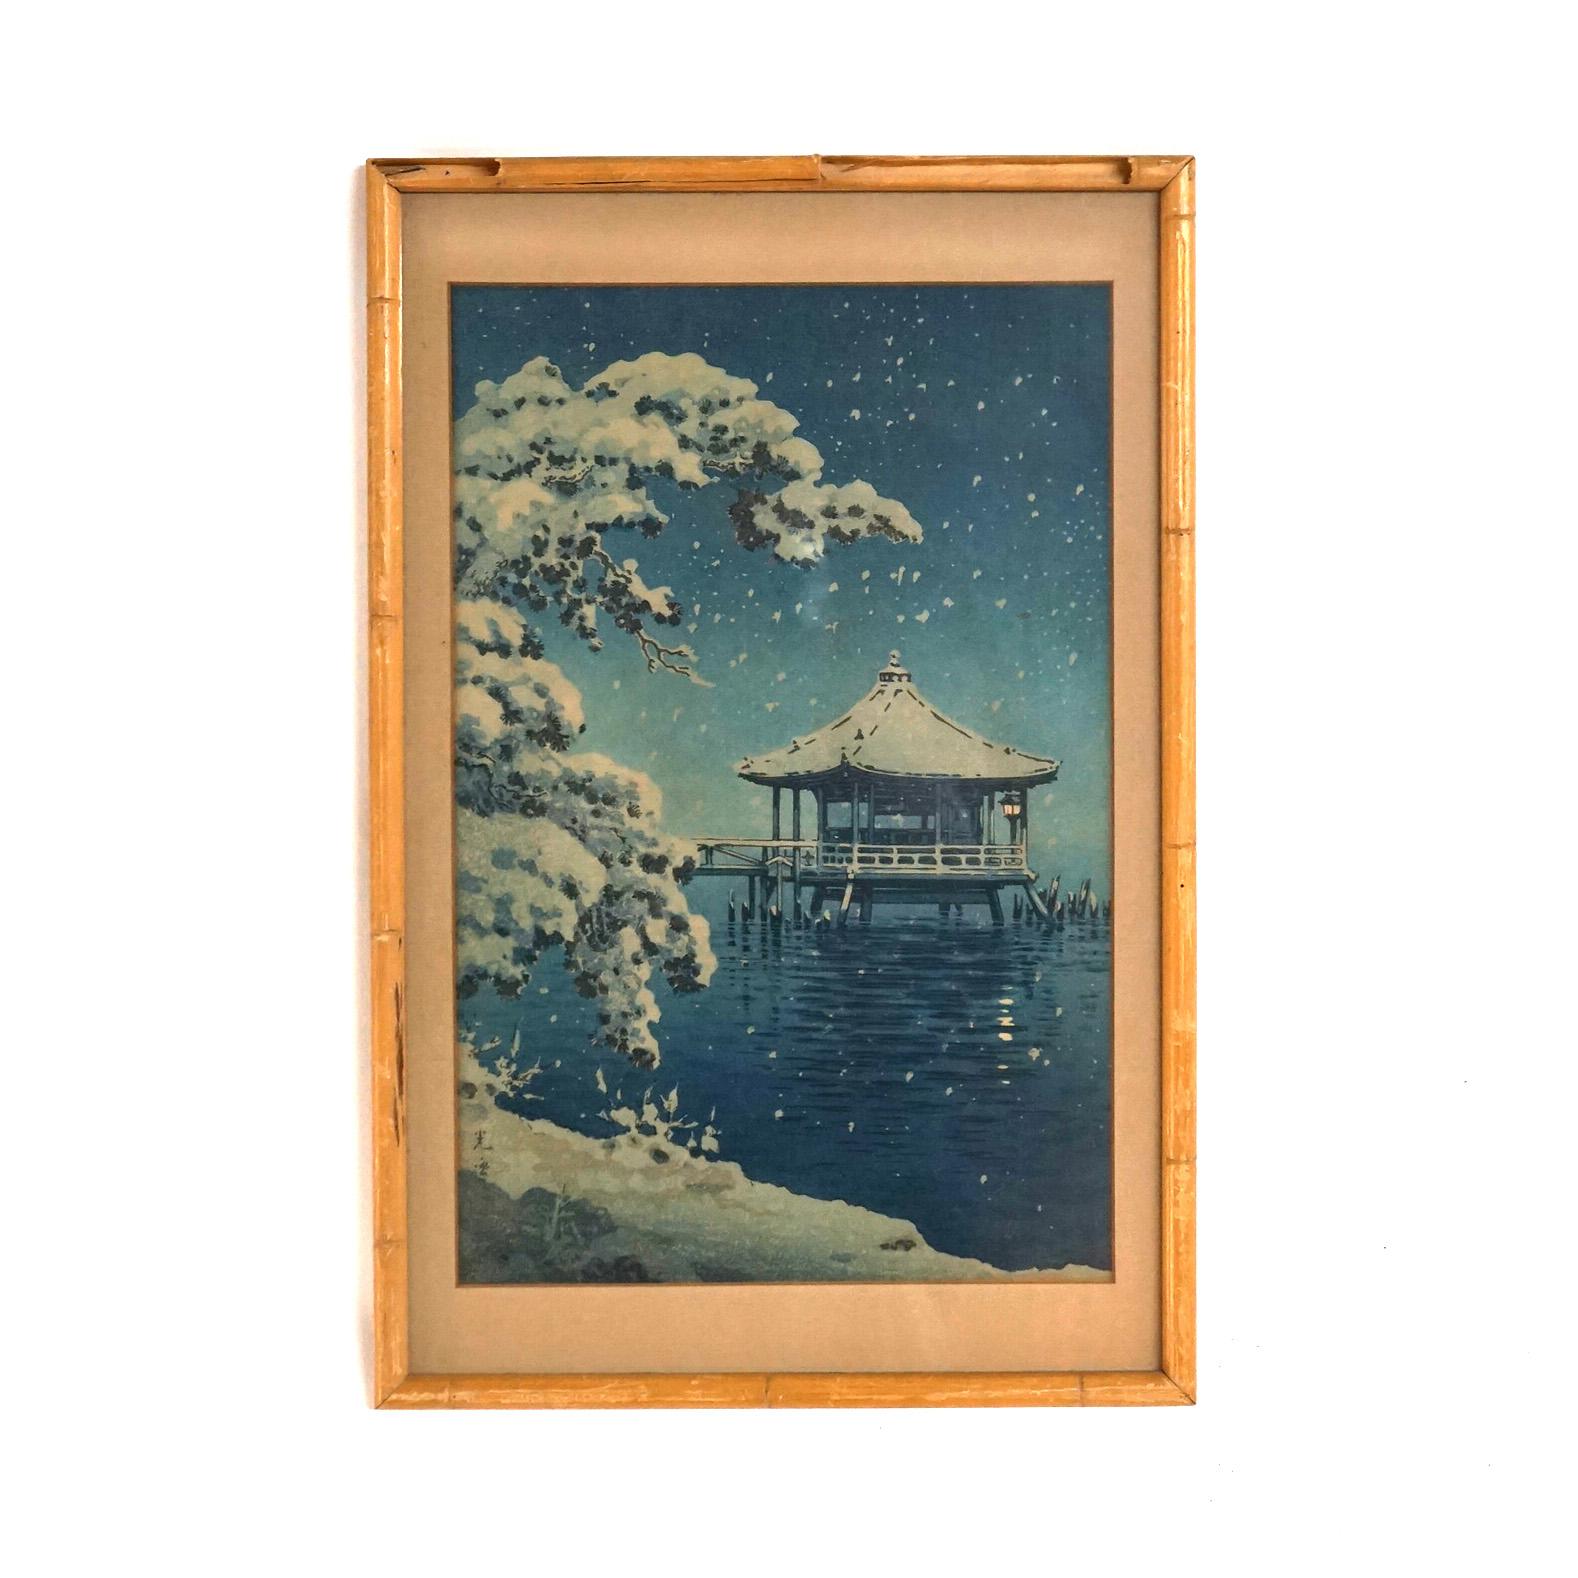 Three Antique Japanese Woodblock Prints - Genre, Mt Fugi & Landscape C1920

Measures - 17.75